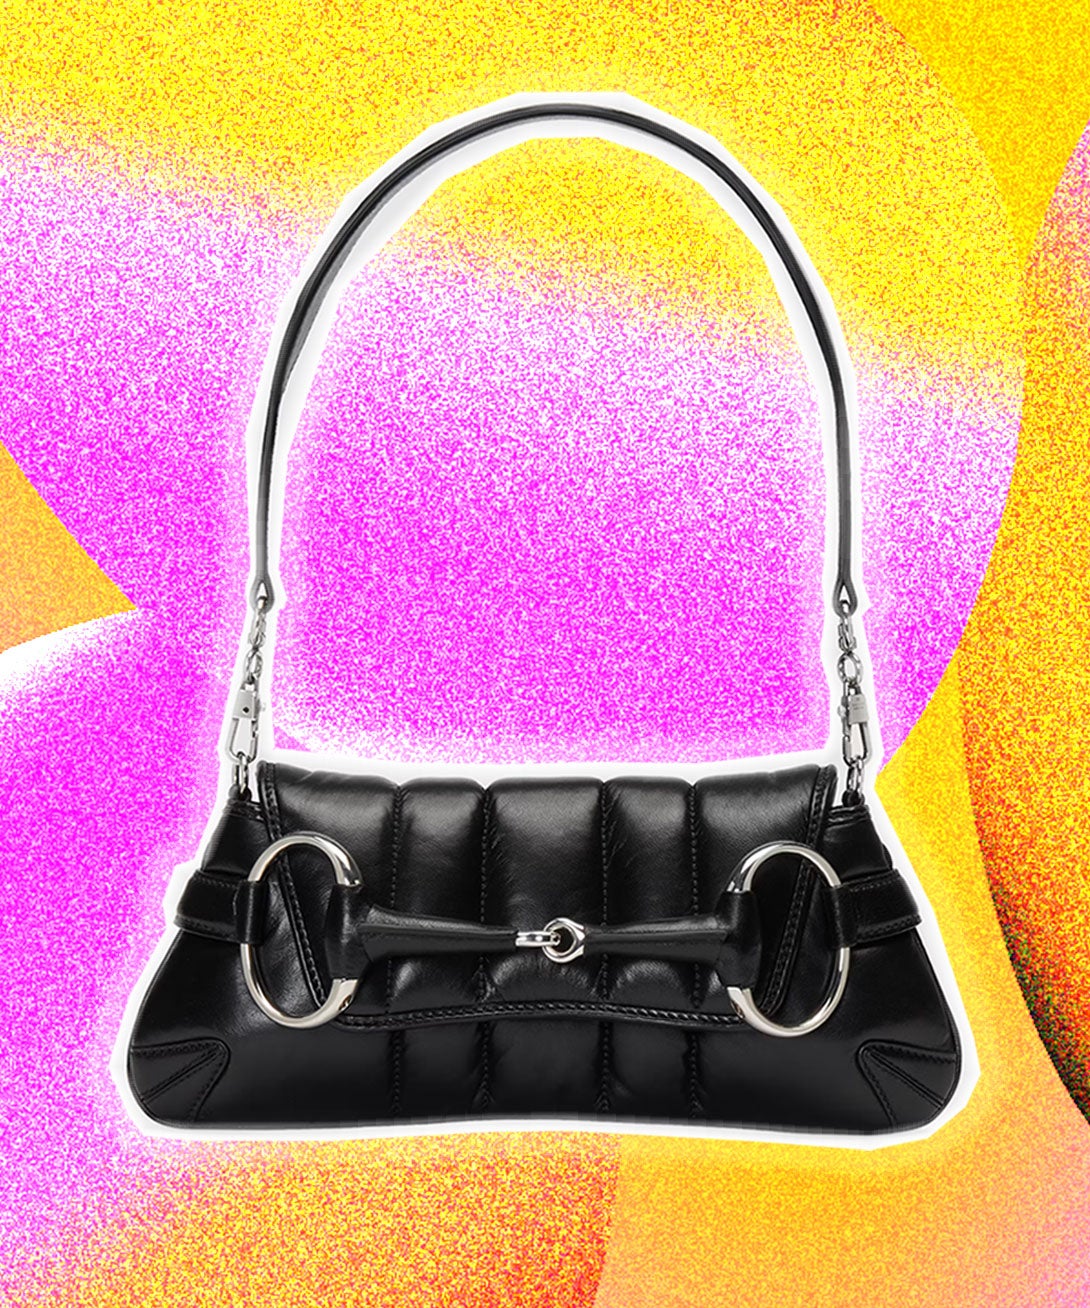 Gucci's Horsebit Chain Bag Is The Trendiest Bag Of 2023